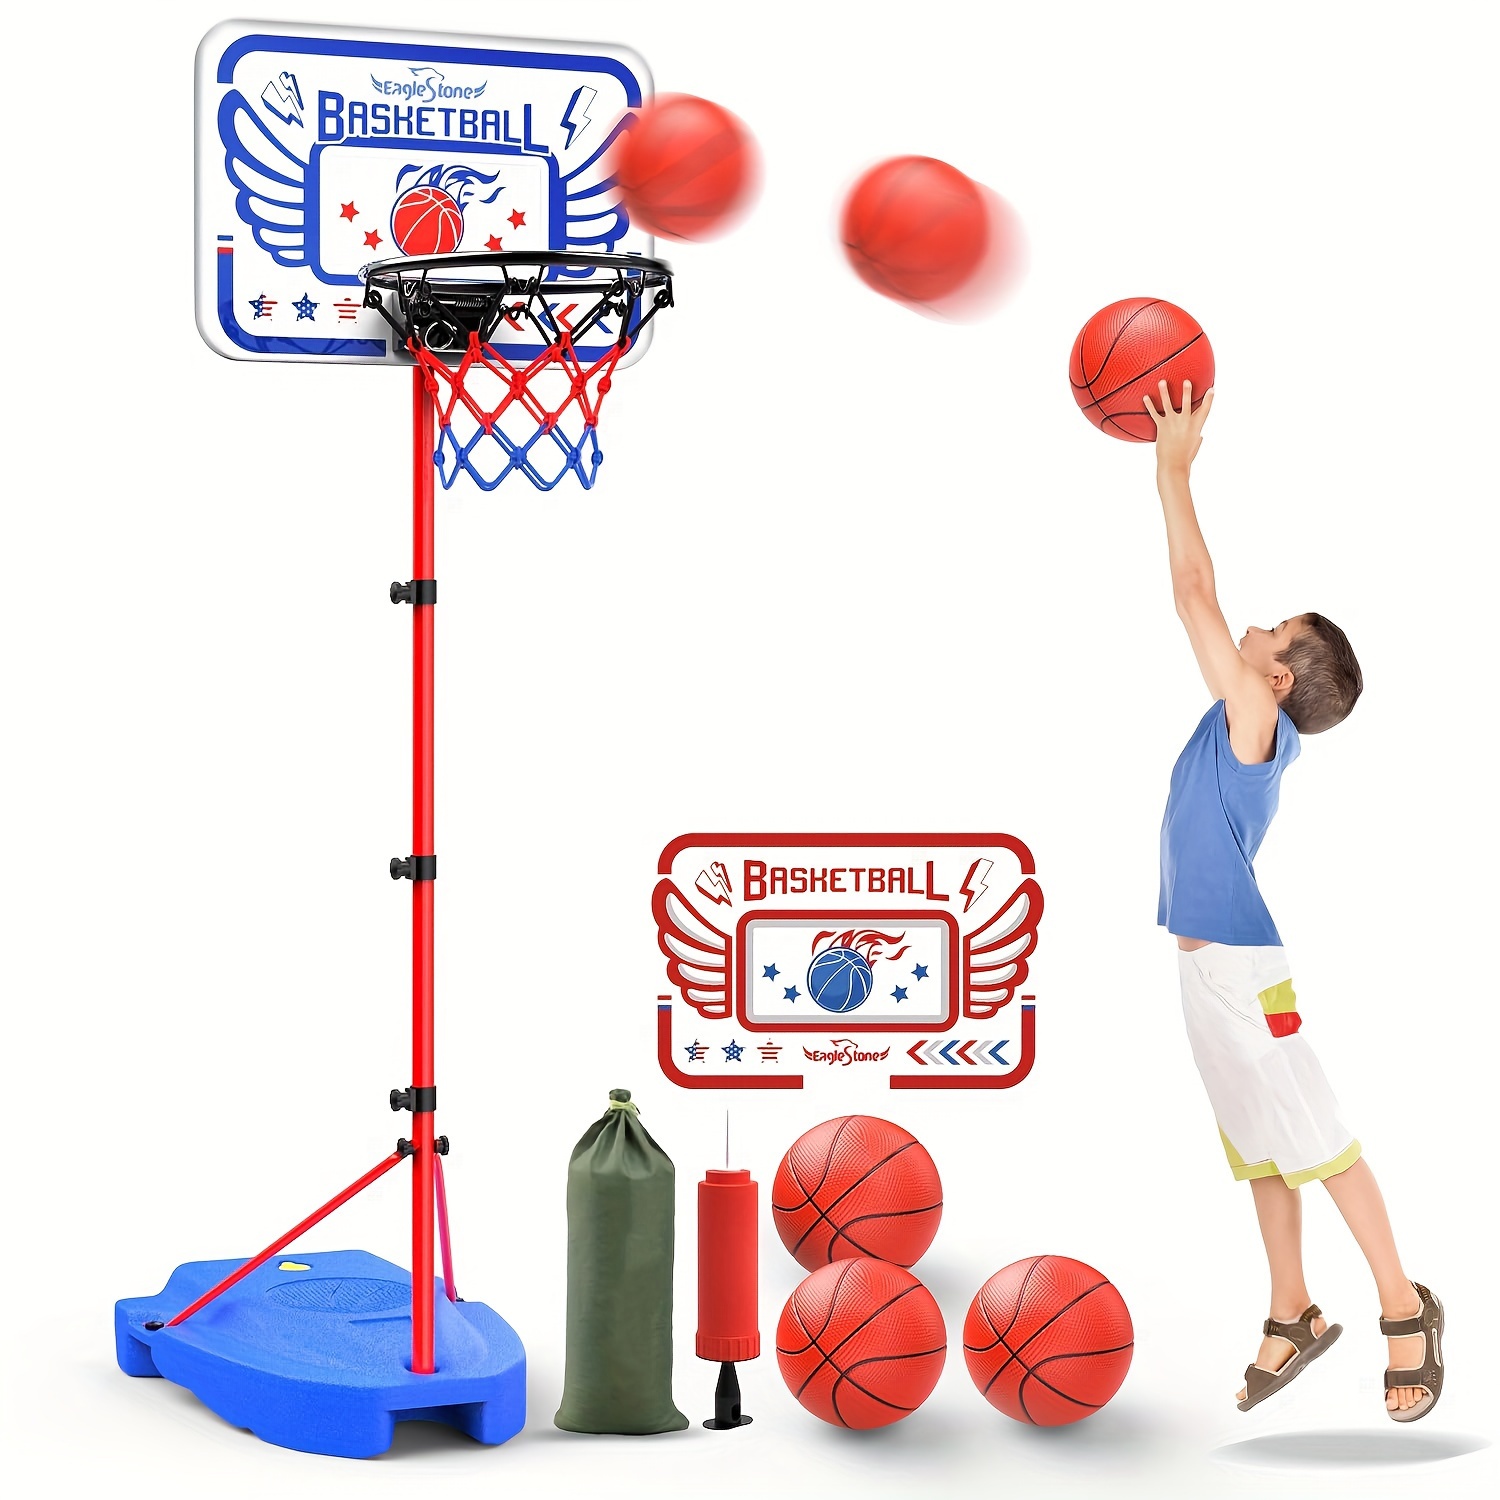 

Eaglestone Kids Basketball Hoop, Adjustable Toddler Basketball Hoop Toy For Kids Indoor Outdoor Mini Portable Basketball Goals, Sport Game Gifts For Age 3 4 5 6 7 8 9 Boys Girls